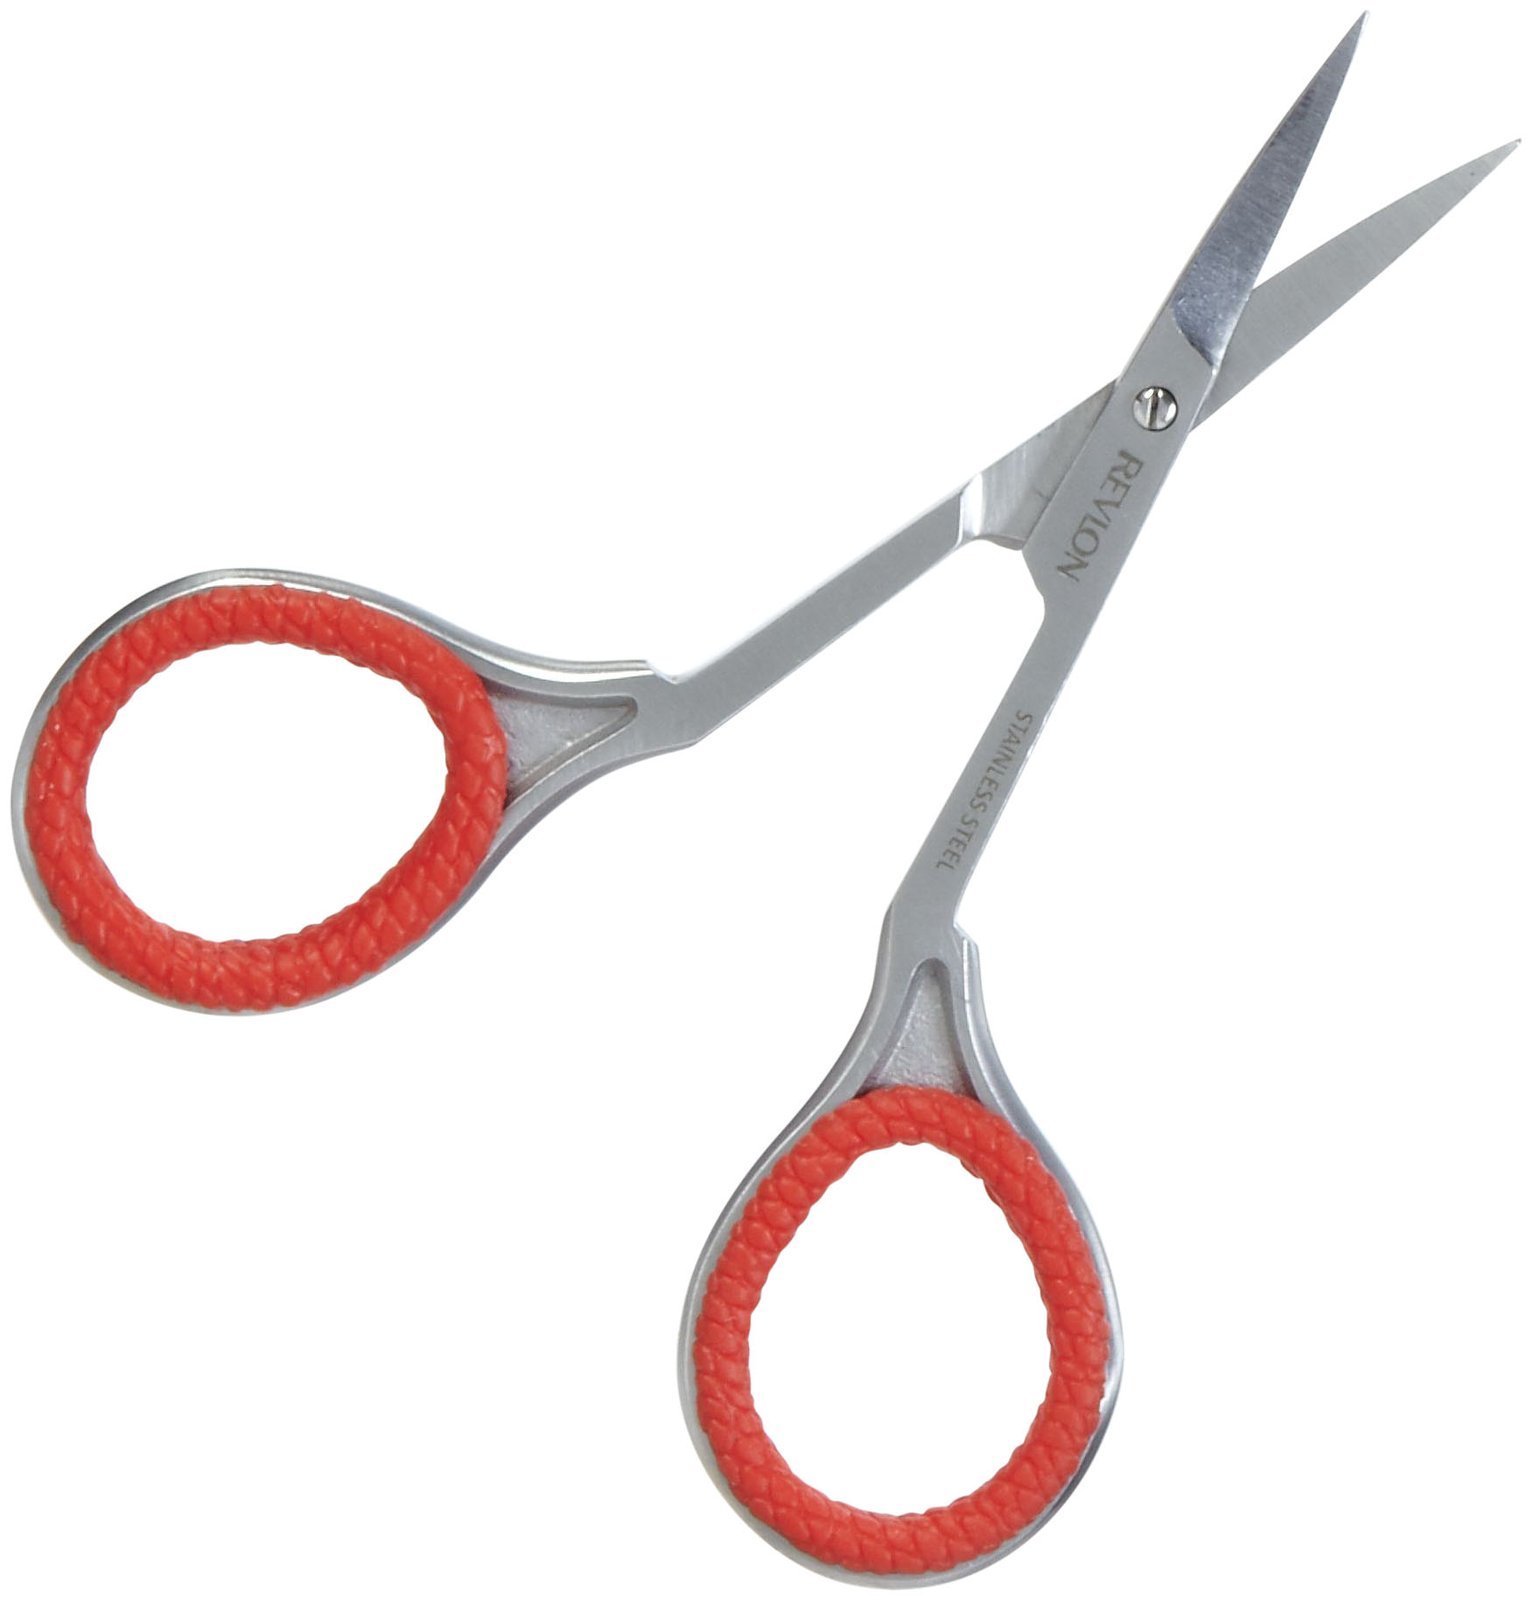 Revlon Cuticle Scissors, Curved Blade